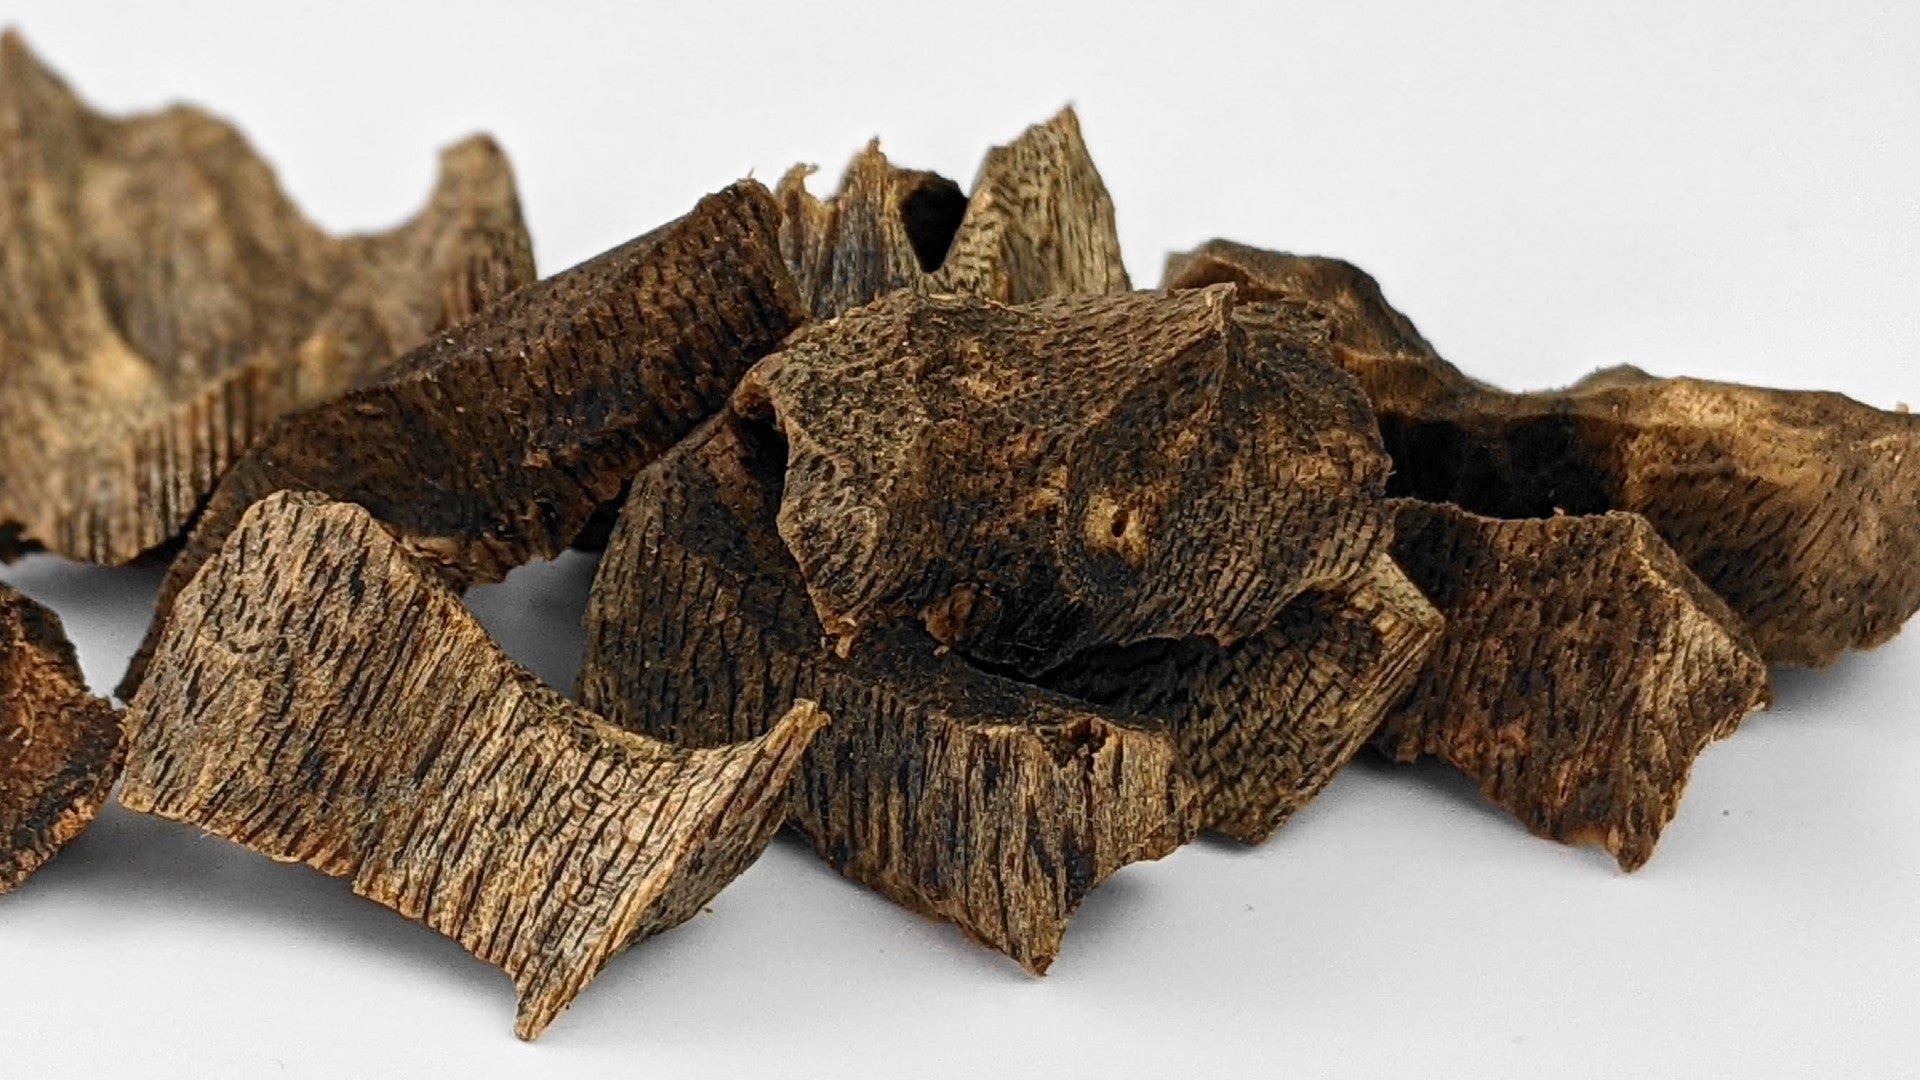 *New* Green Kygarwood Powder and Kygarwood chips- from Sustainable Premium Ky Nam Wood -